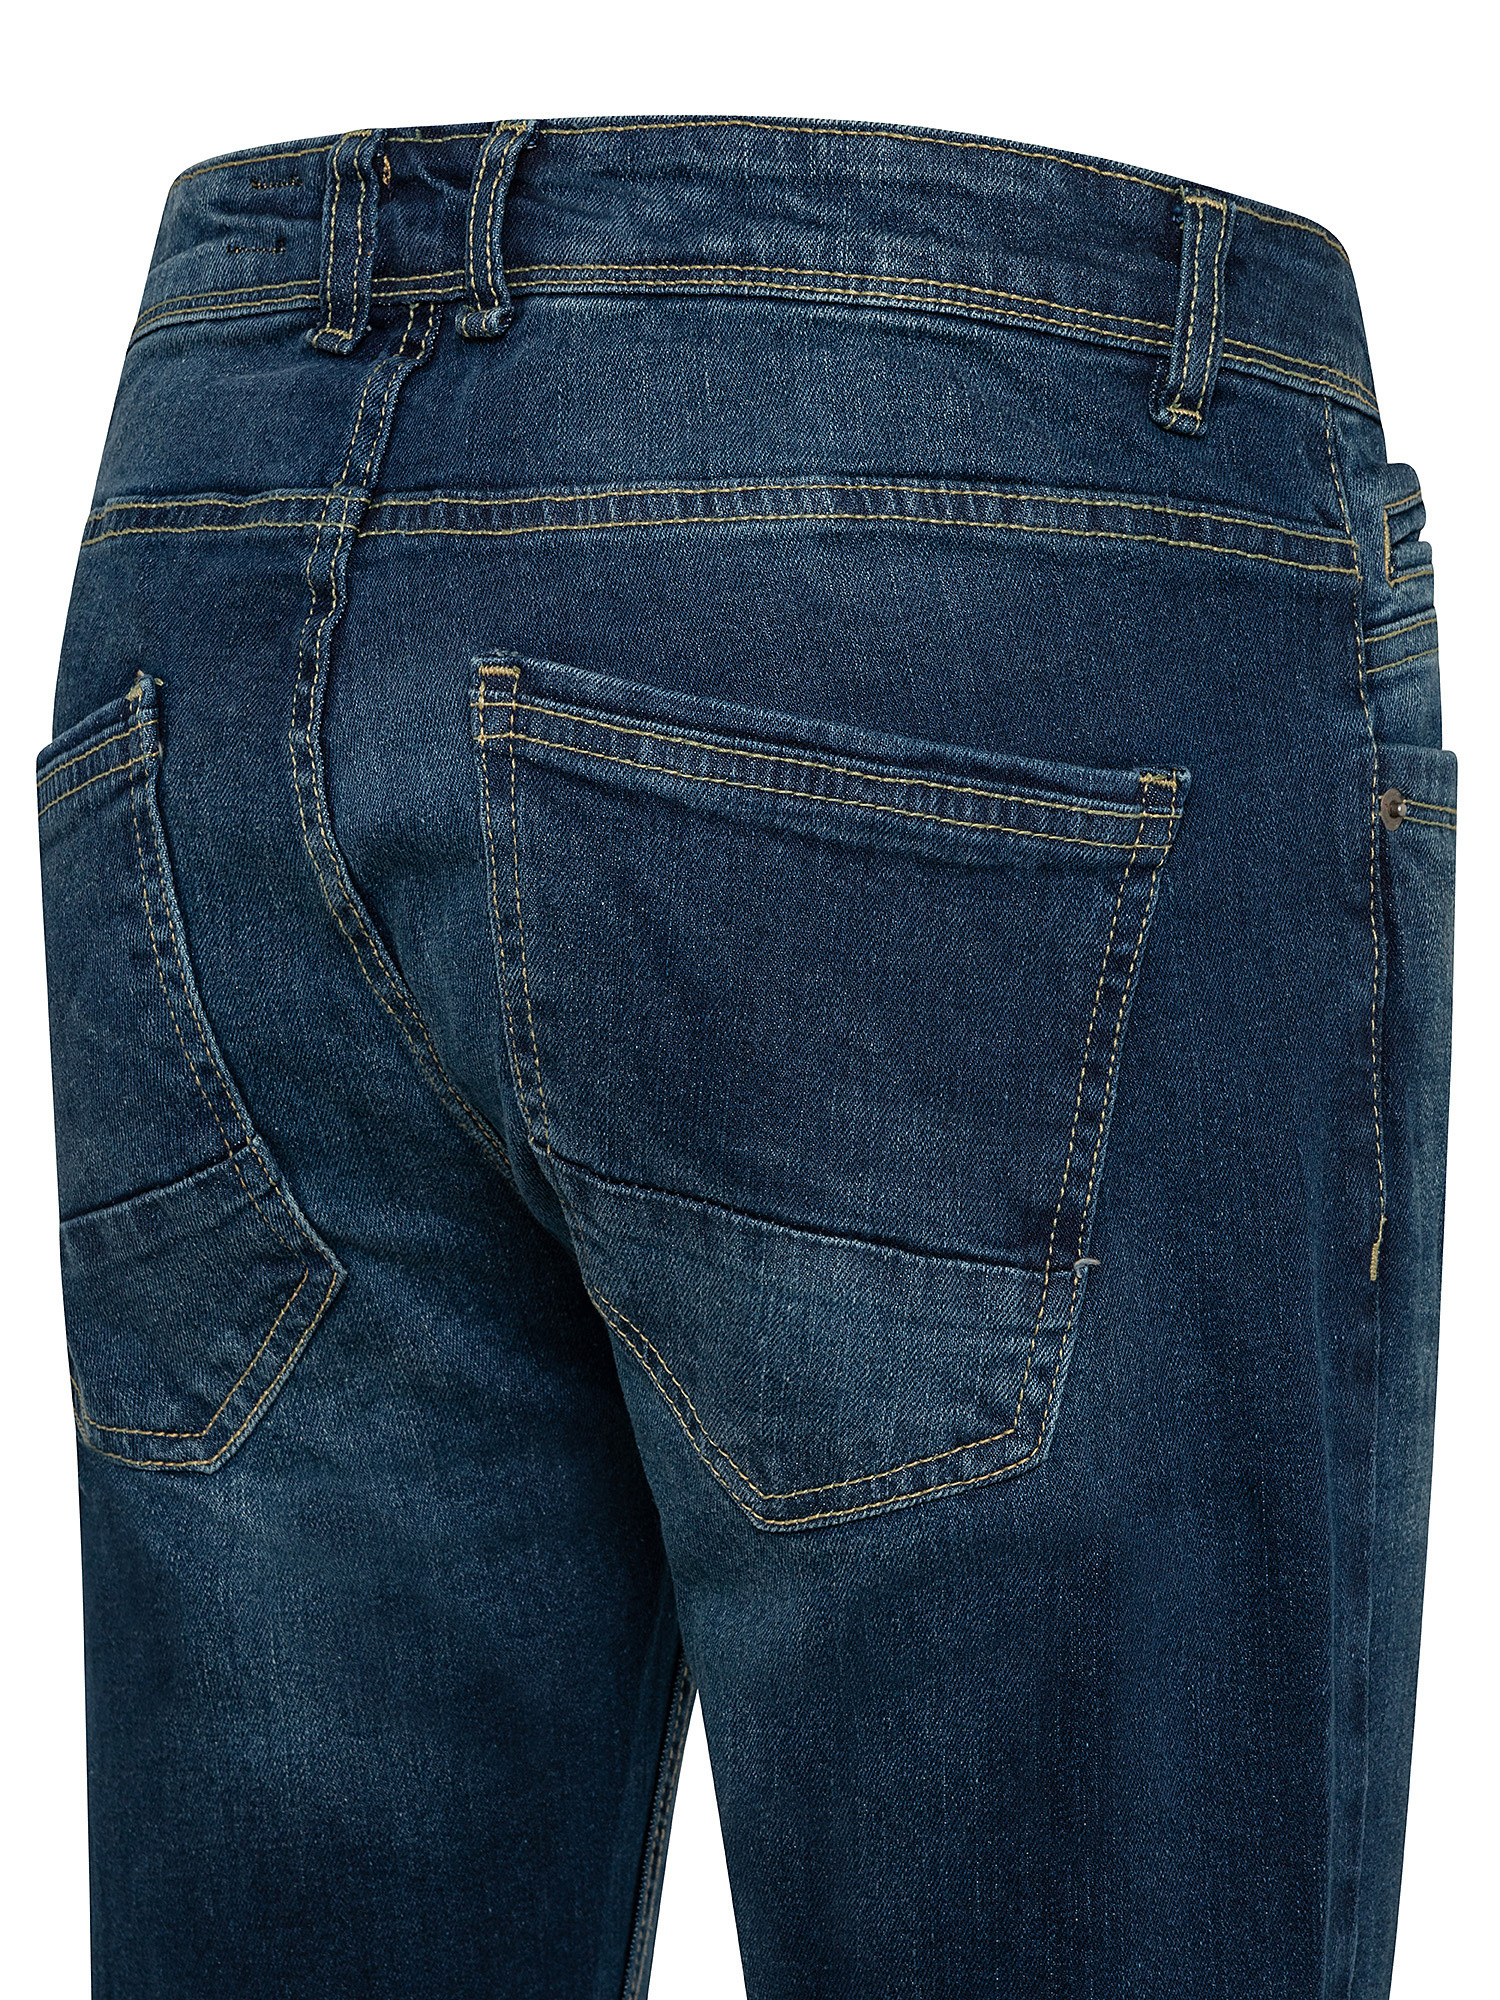 Jeans stretch, Blu, large image number 2